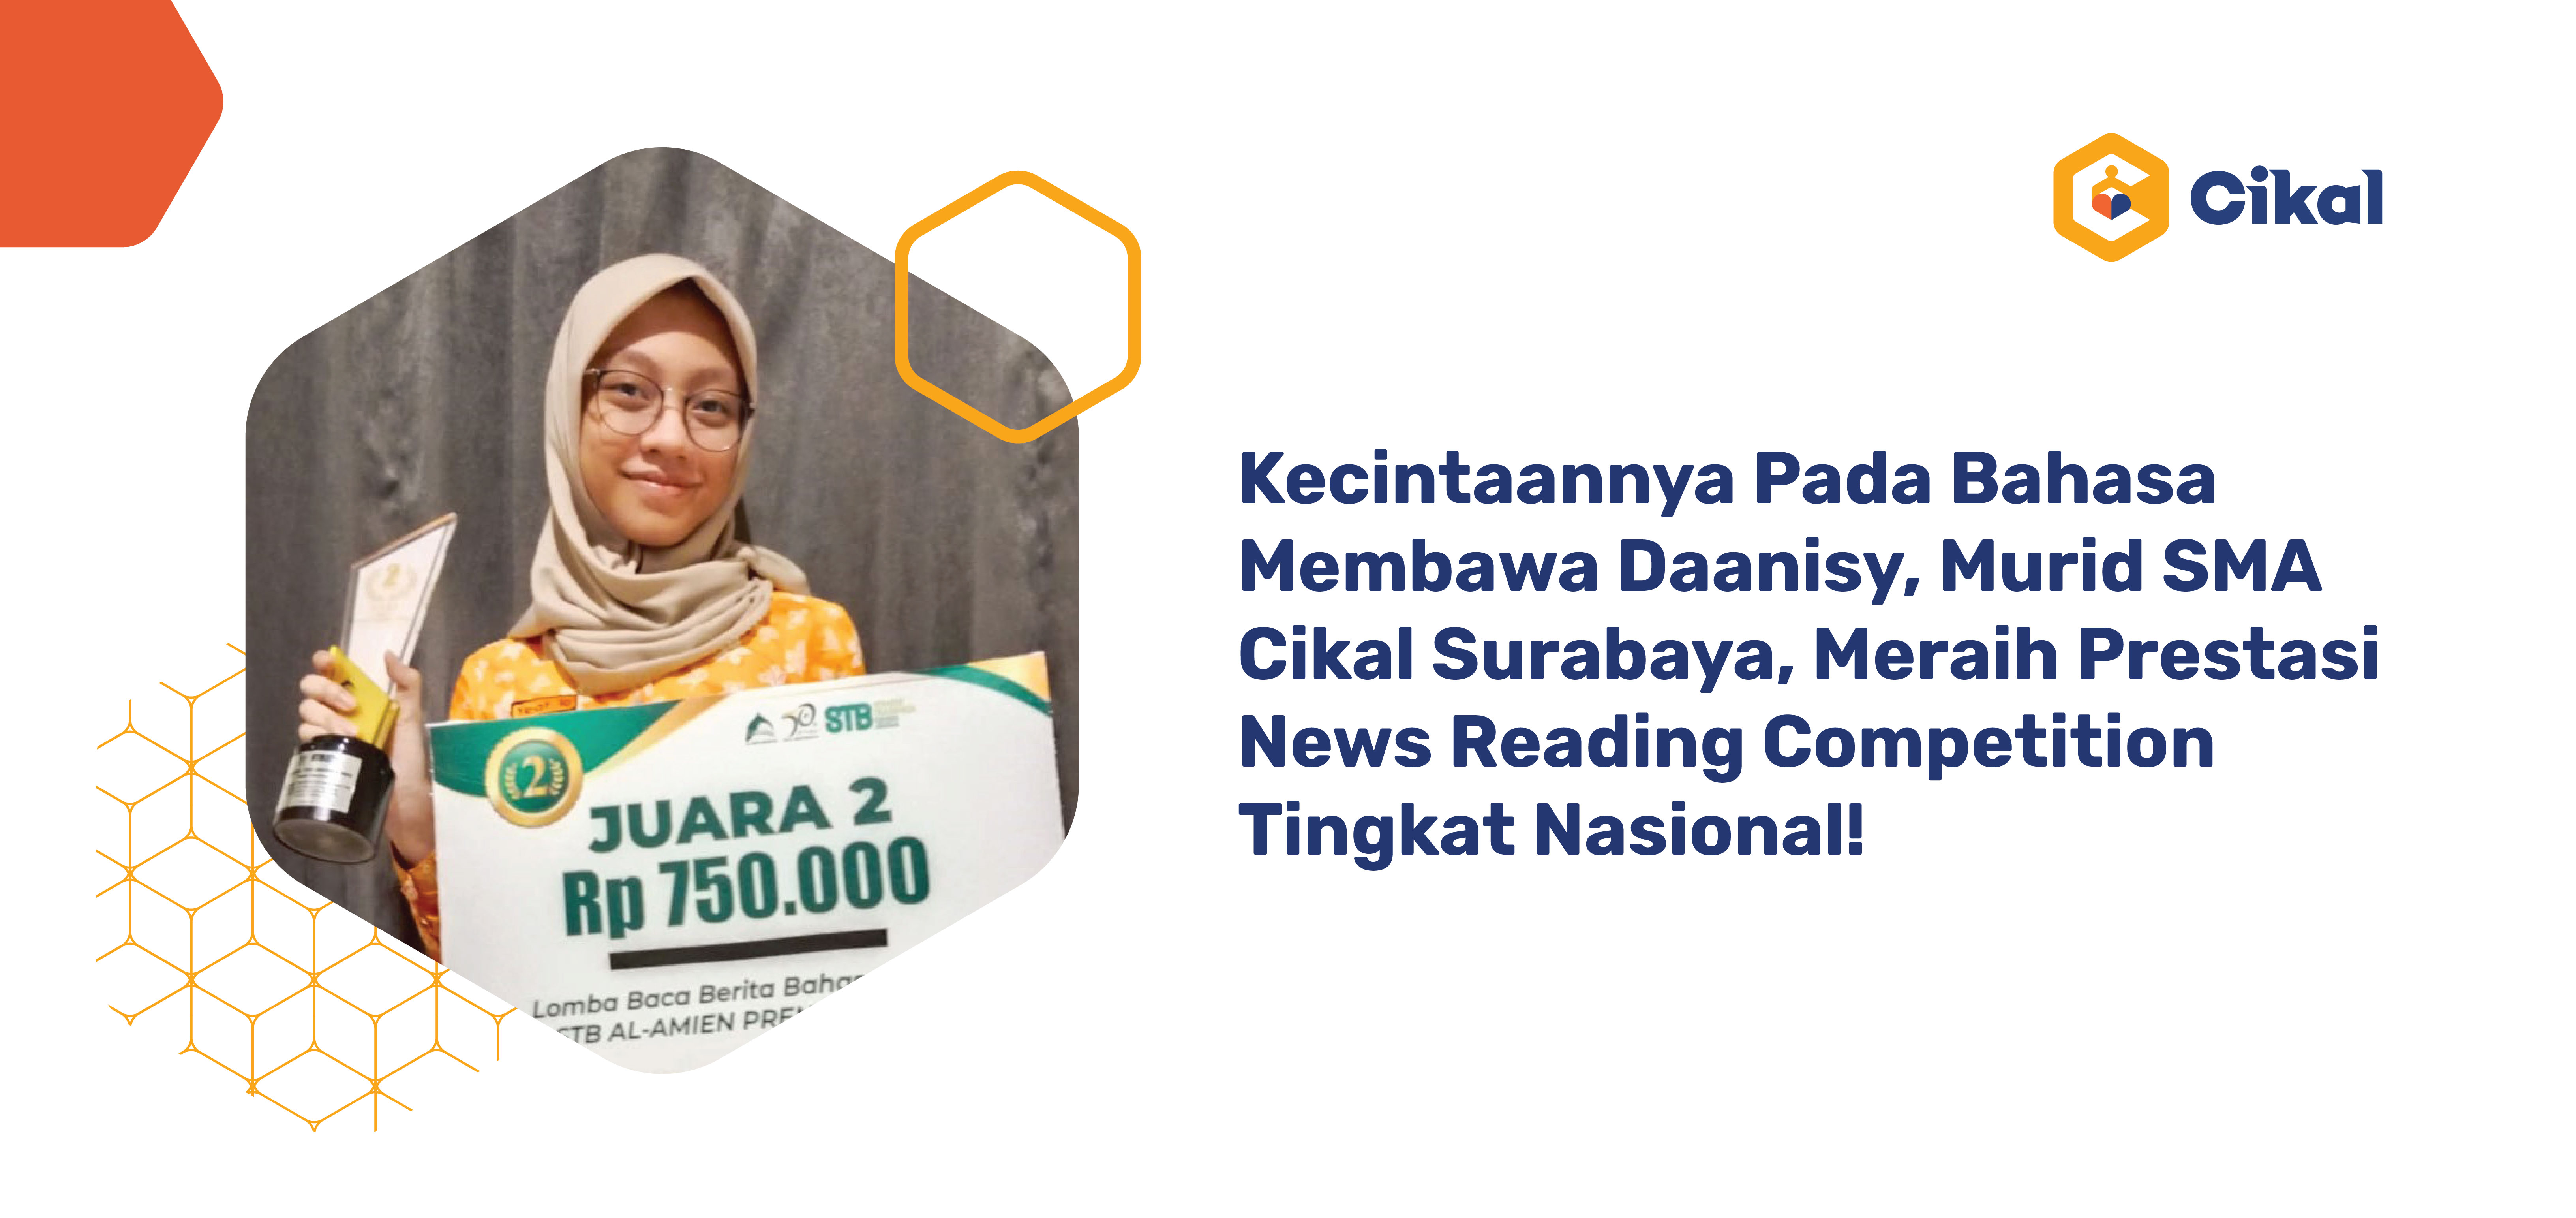 Kecintaannya Pada Bahasa Membawa Daanisy, Murid SMA Cikal Surabaya, Meraih Prestasi News Reading Competition Tingkat Nasional!